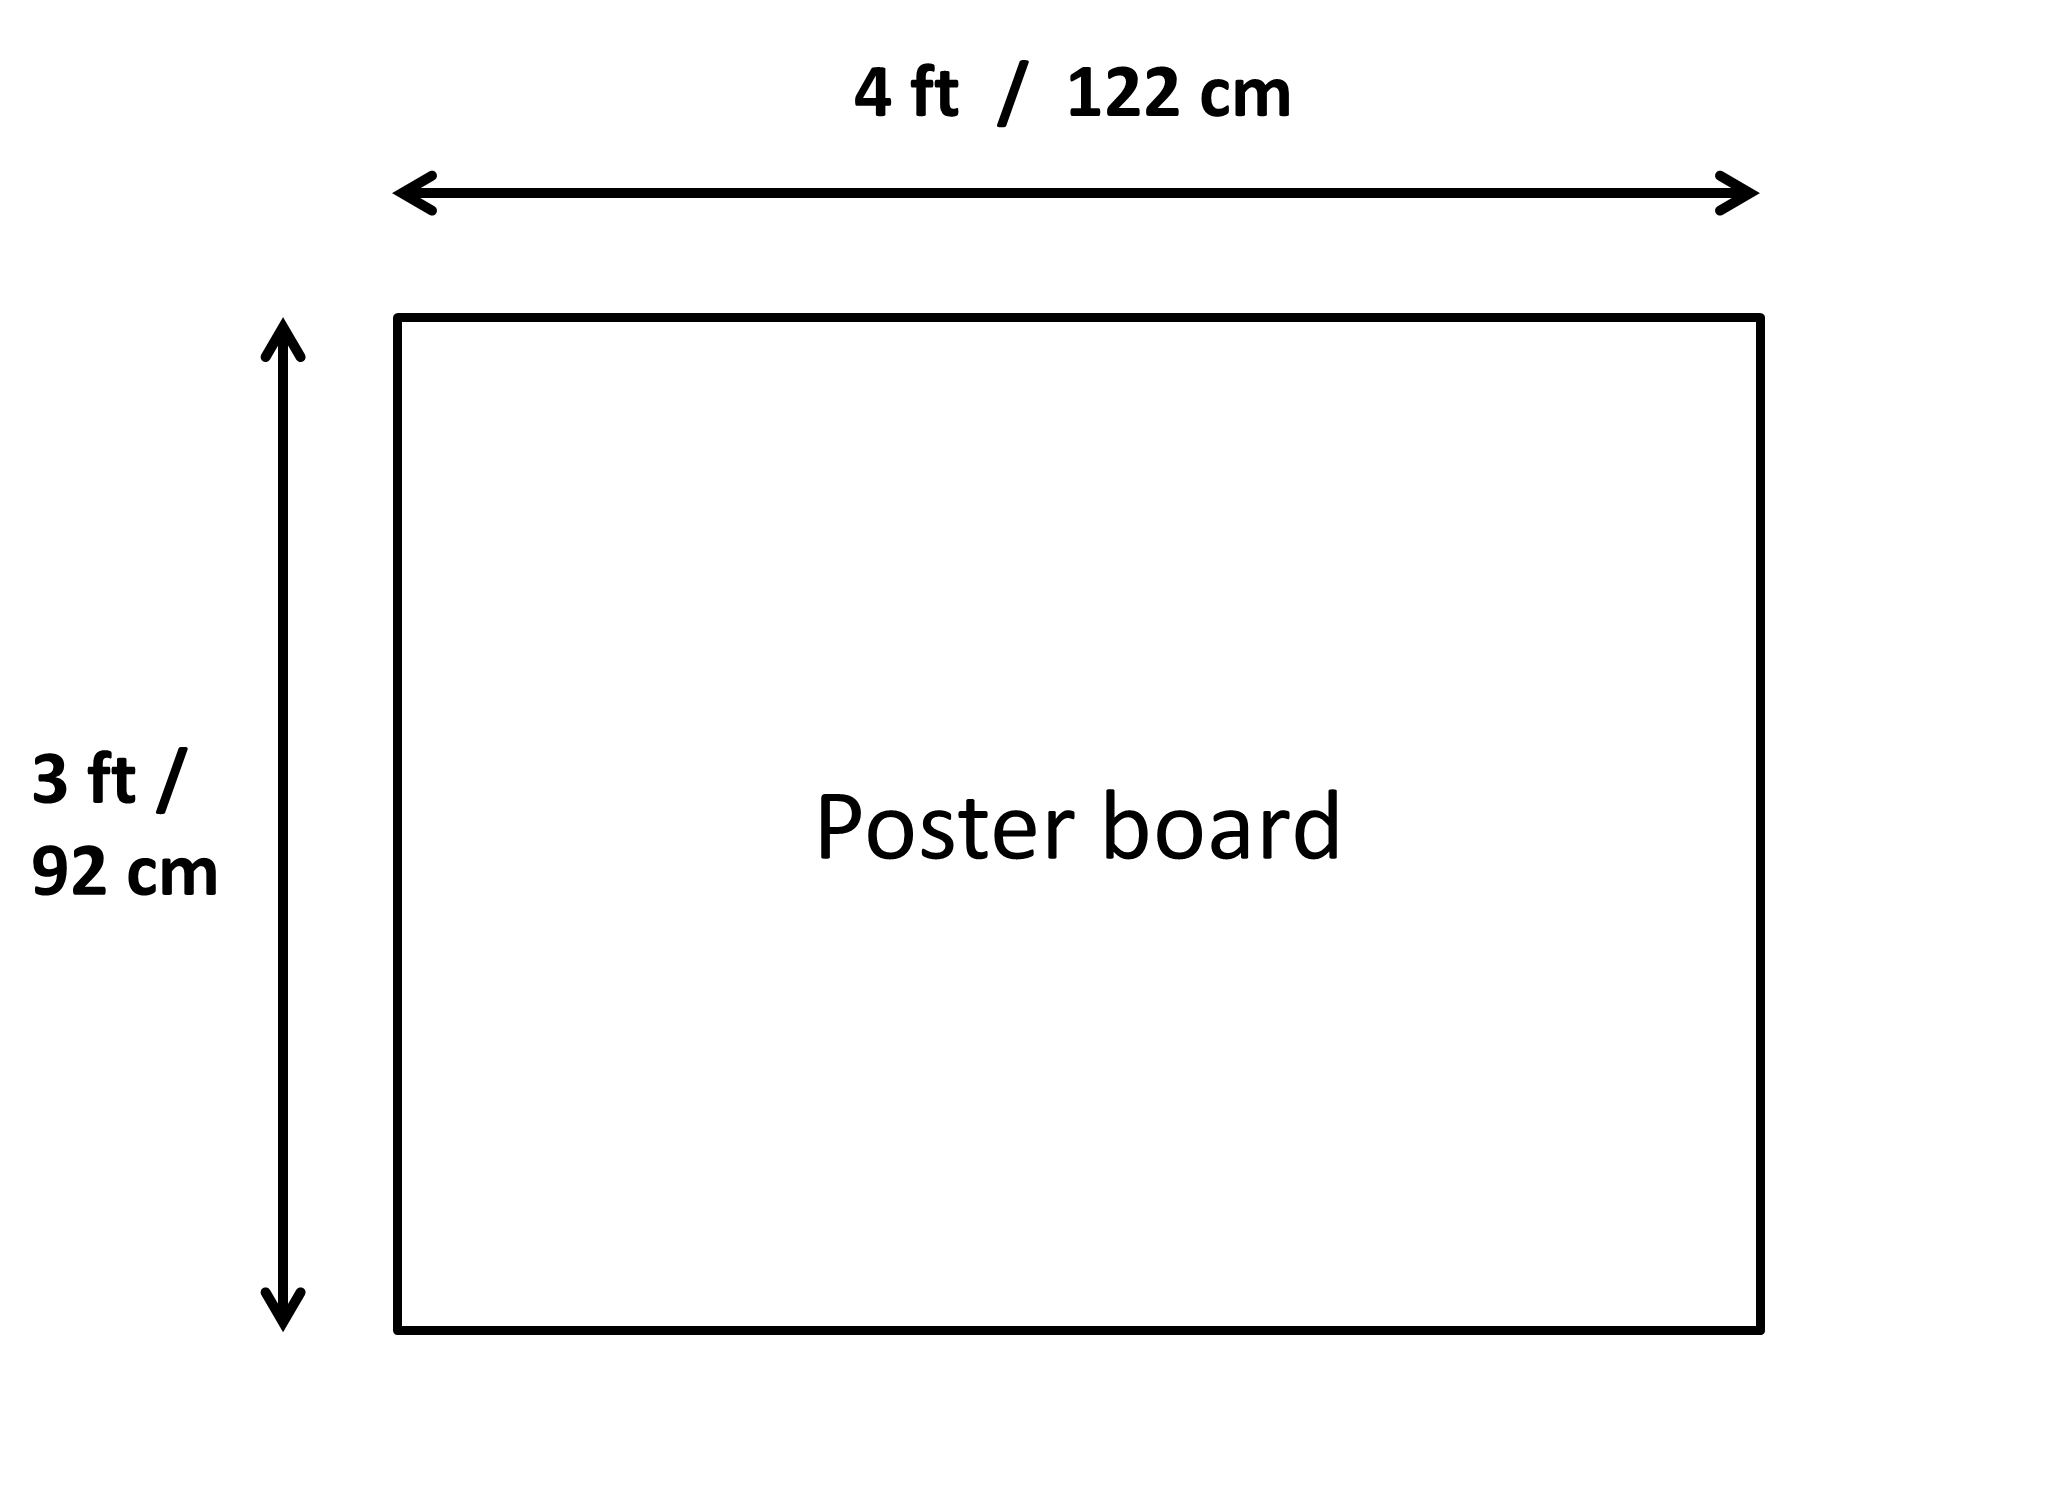 poster presentation size